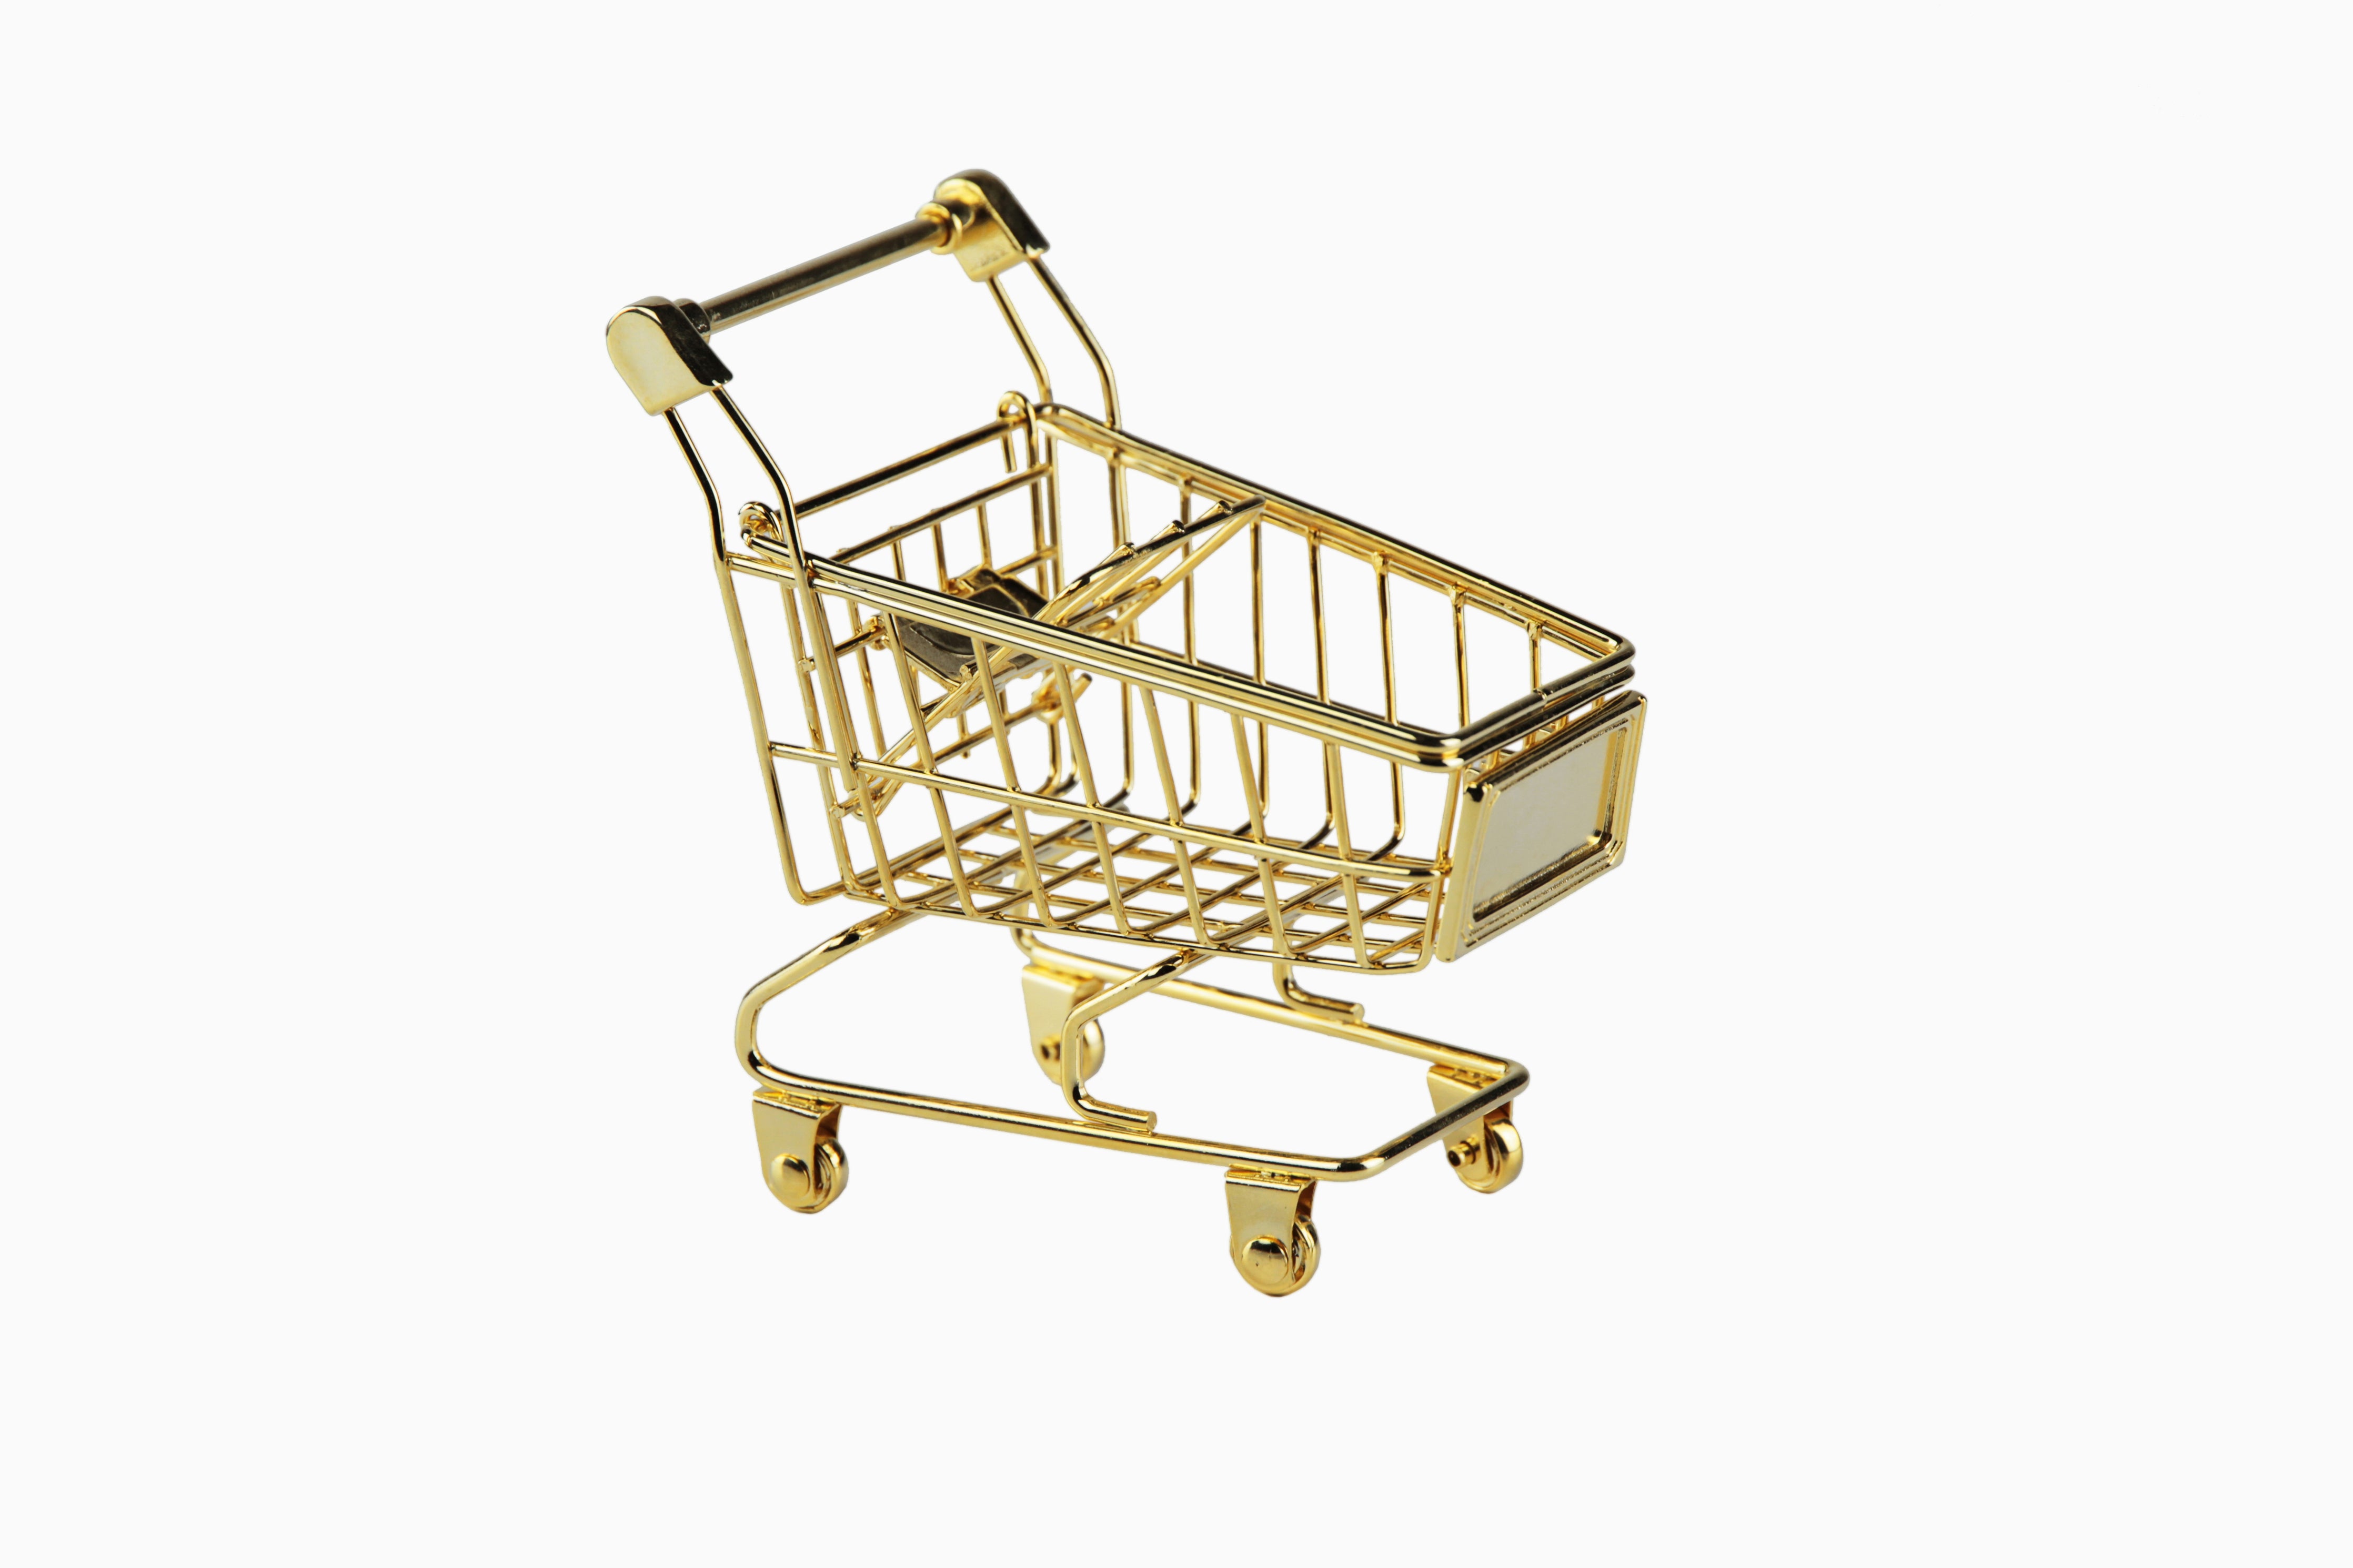 The Gold Cart